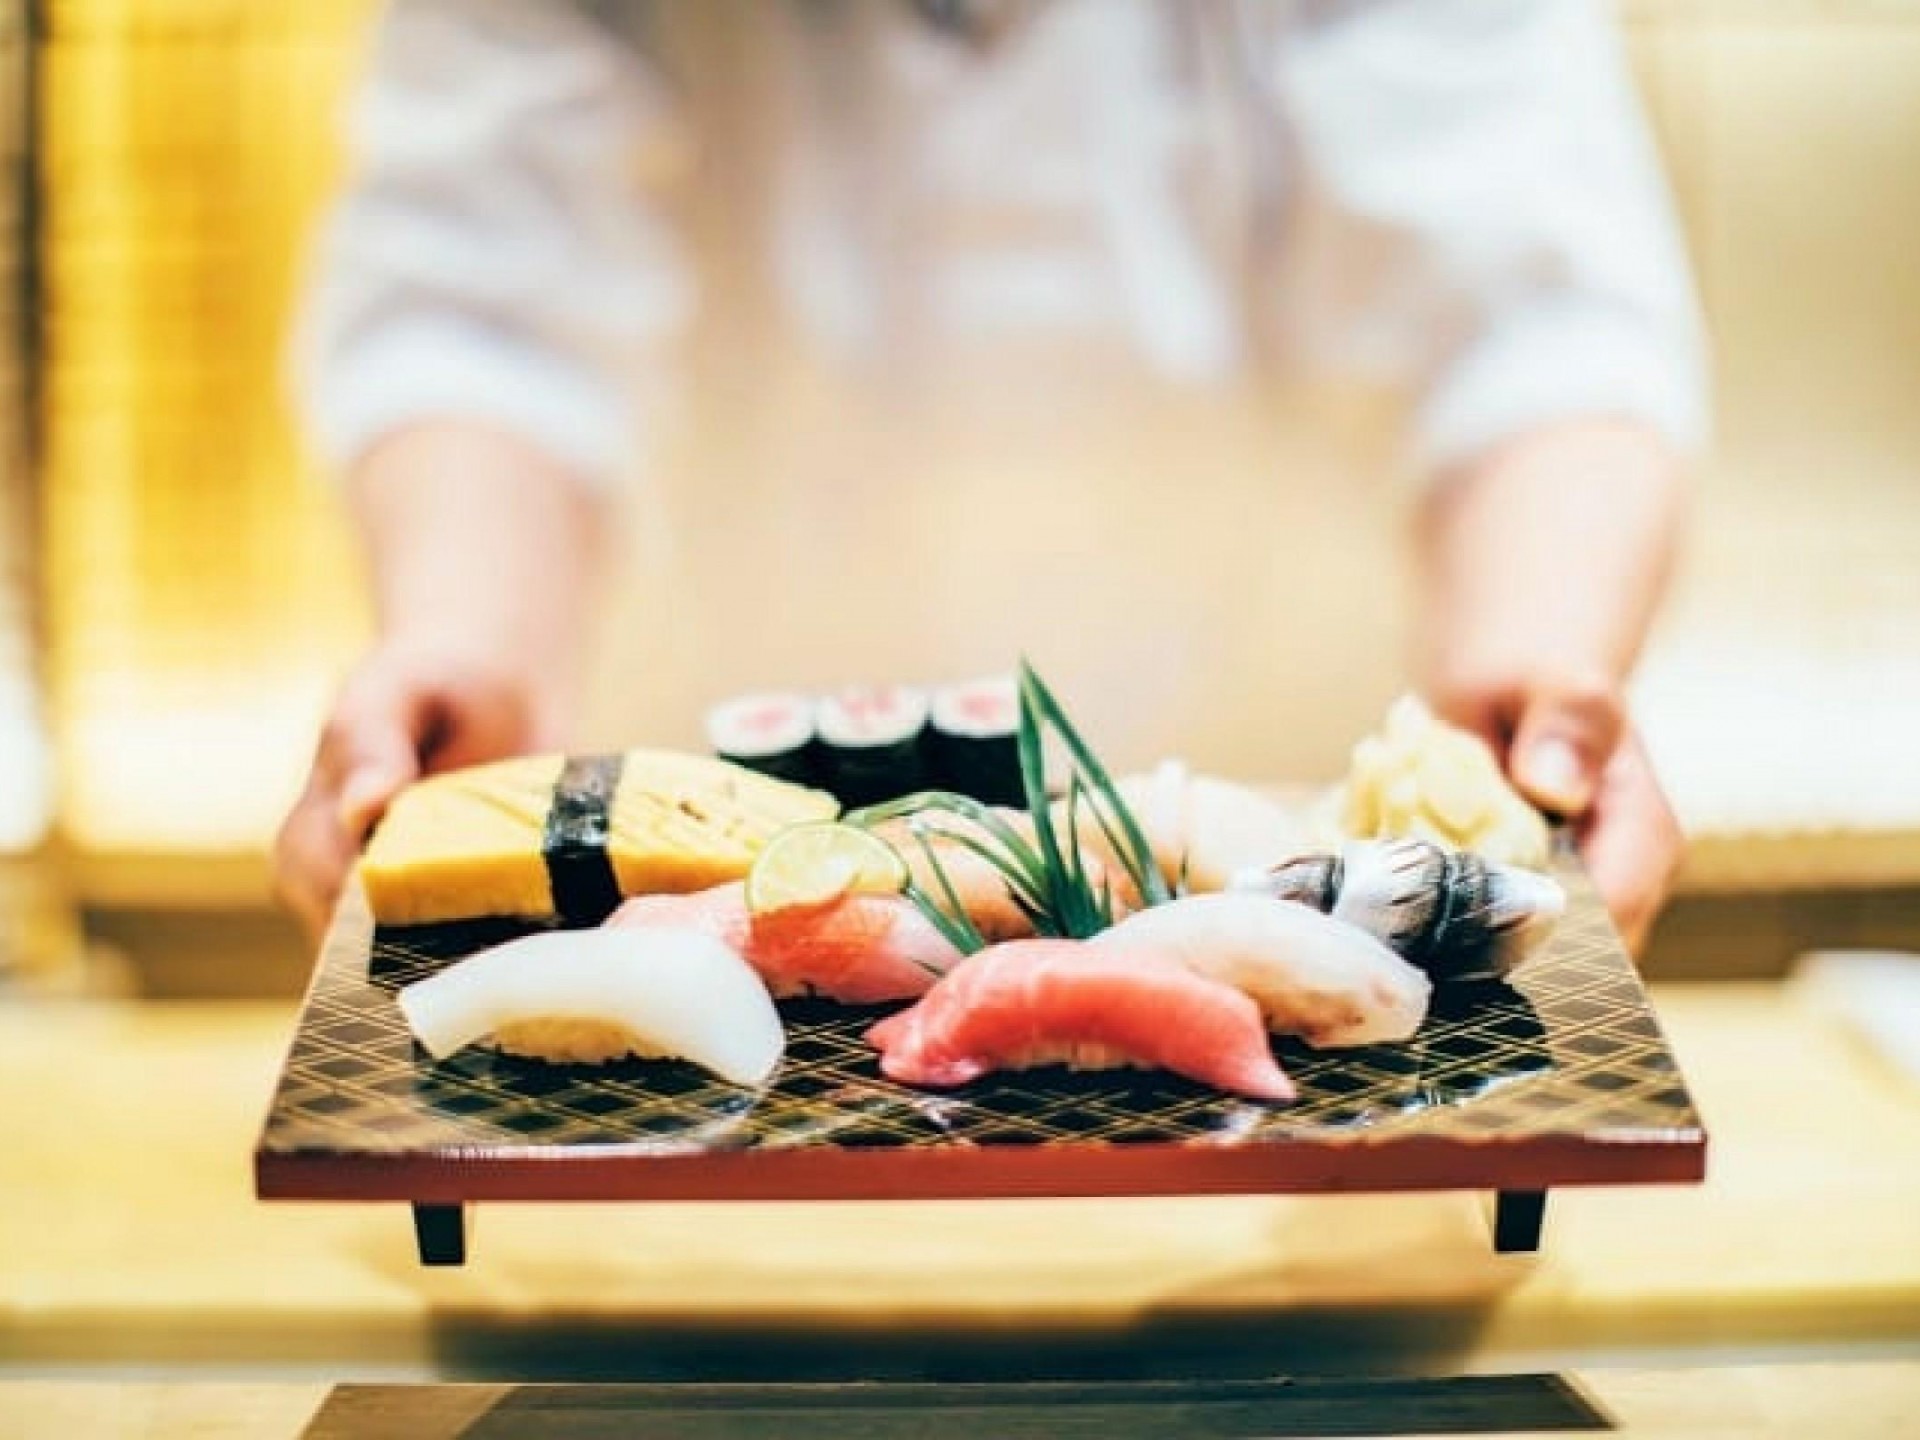 Popular Sushi/Japanese Restaurant, Central...Business For Sale